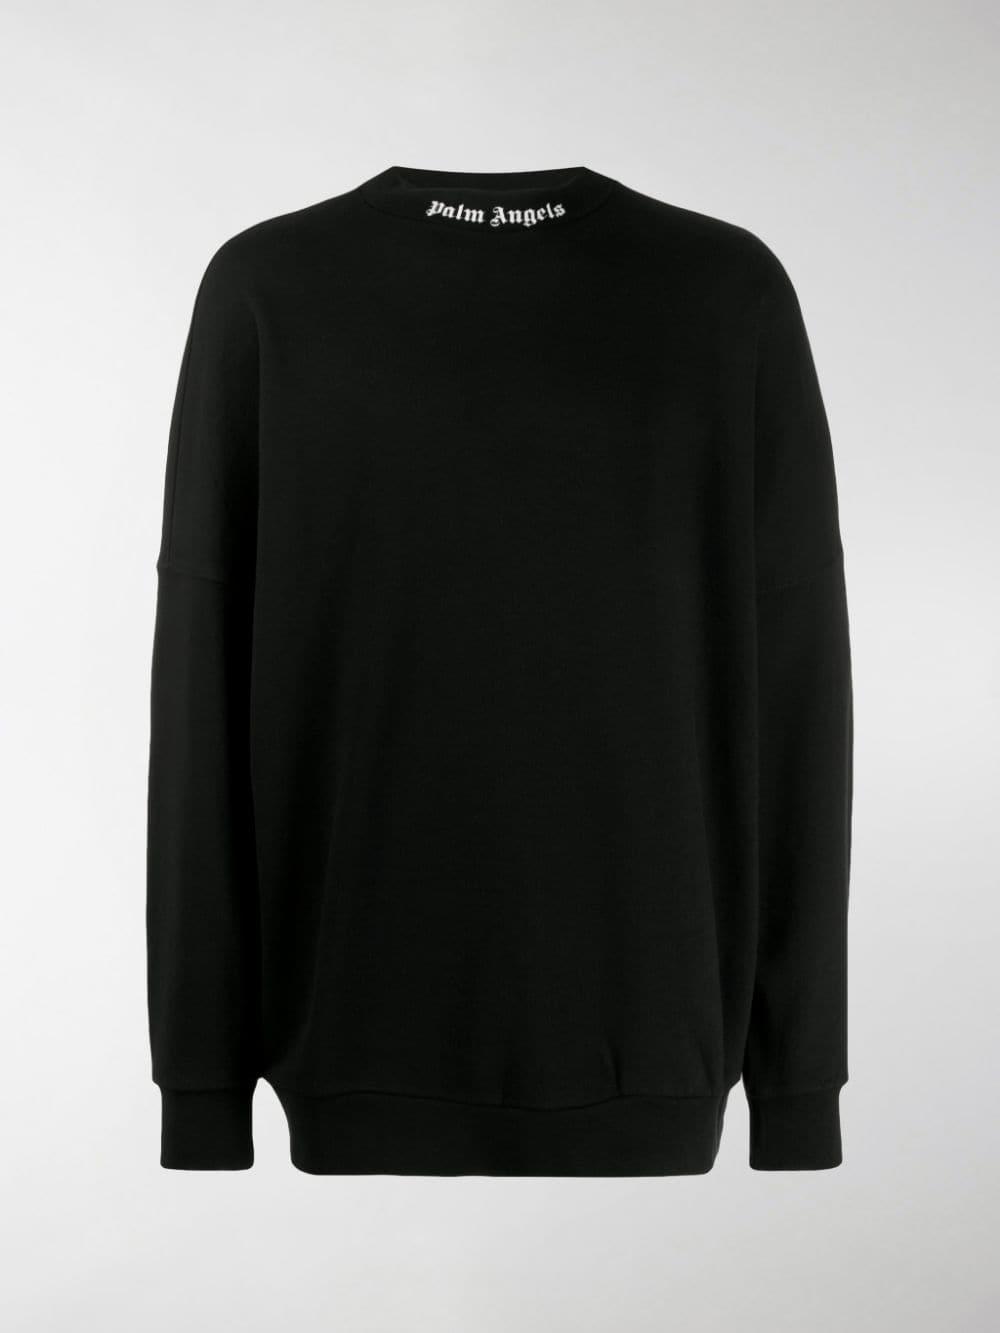 Palm Angels Mock Neck Logo Sweatshirt in Black for Men - Lyst